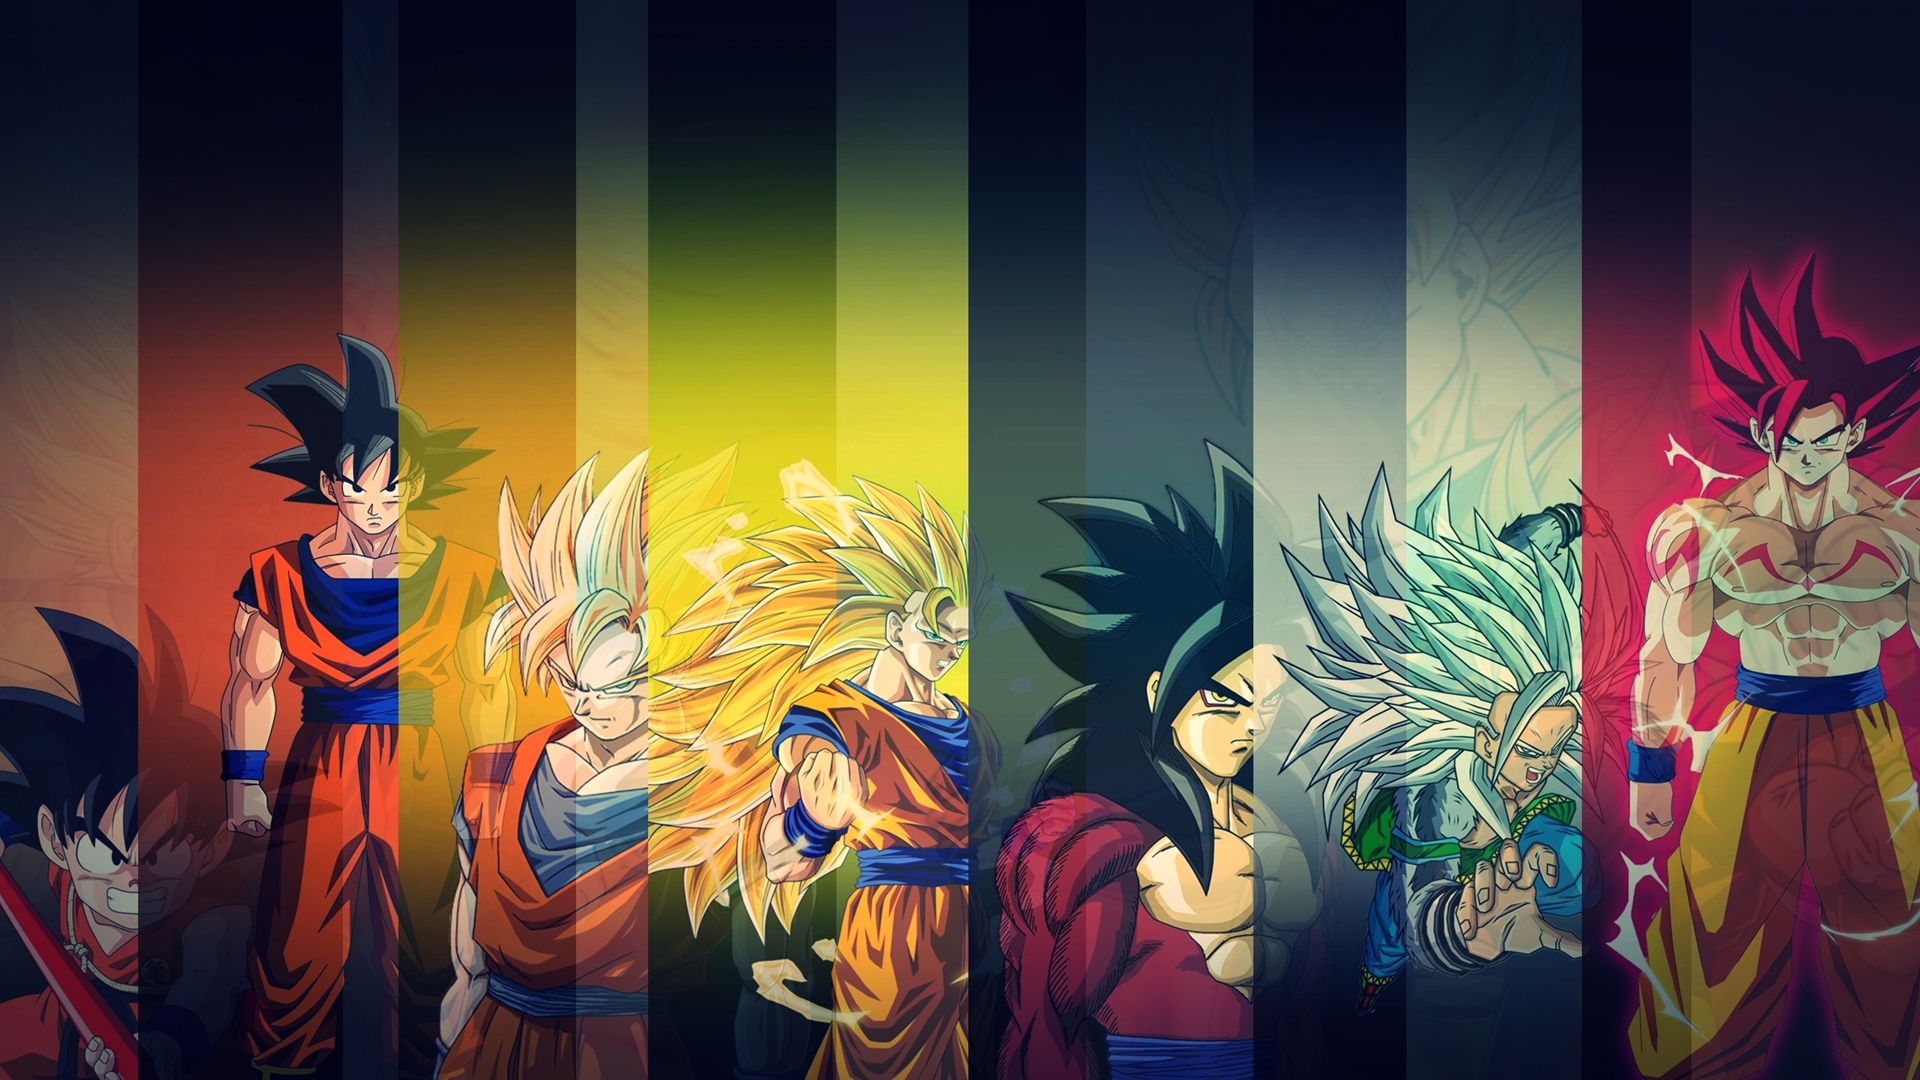 HD Best Goku Desktop Wallpaper HD Full Size - HiReWallpapers 842